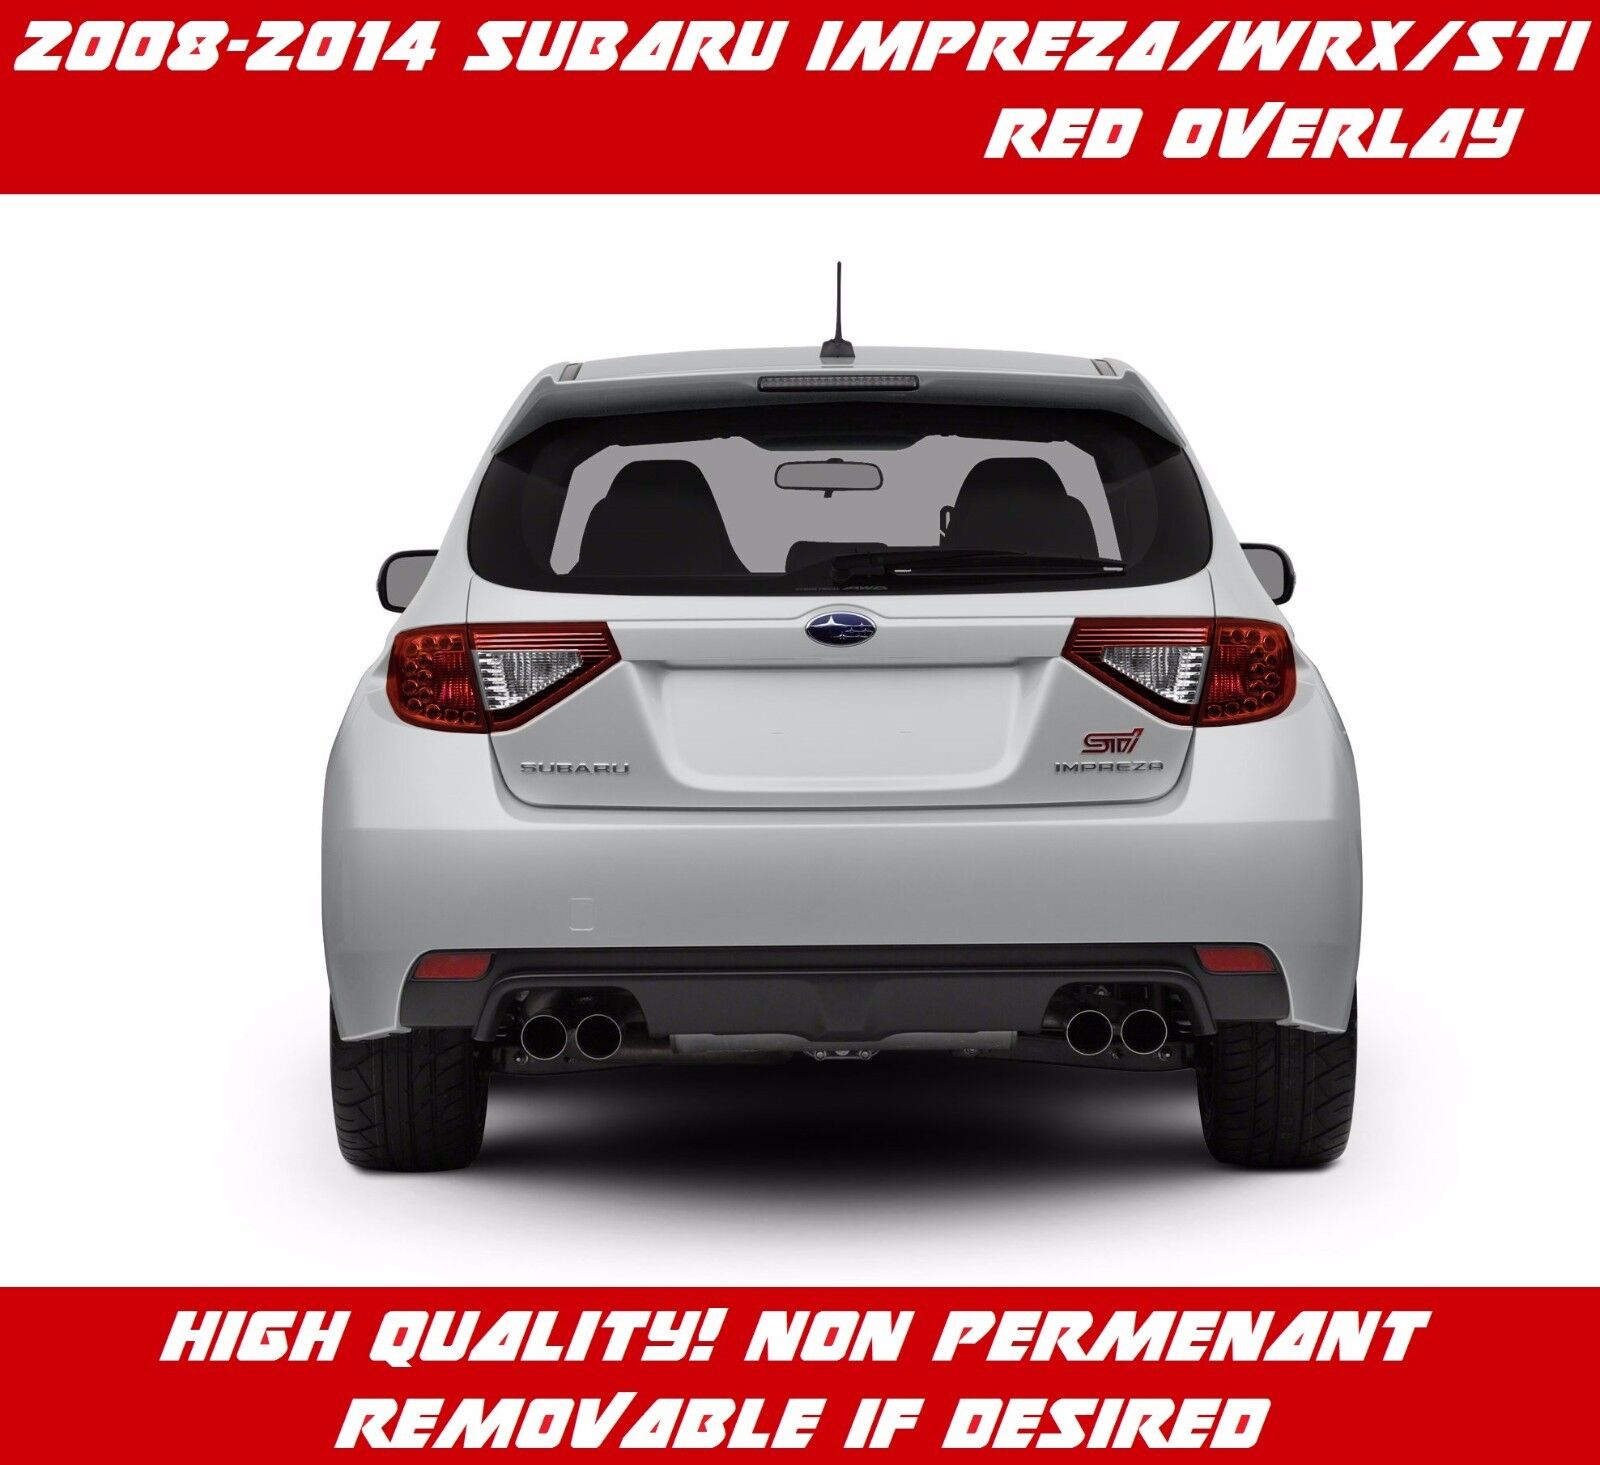 Red Tail Light Vinyl Overlays for Subaru Impreza WRX STI 2008 - 2014